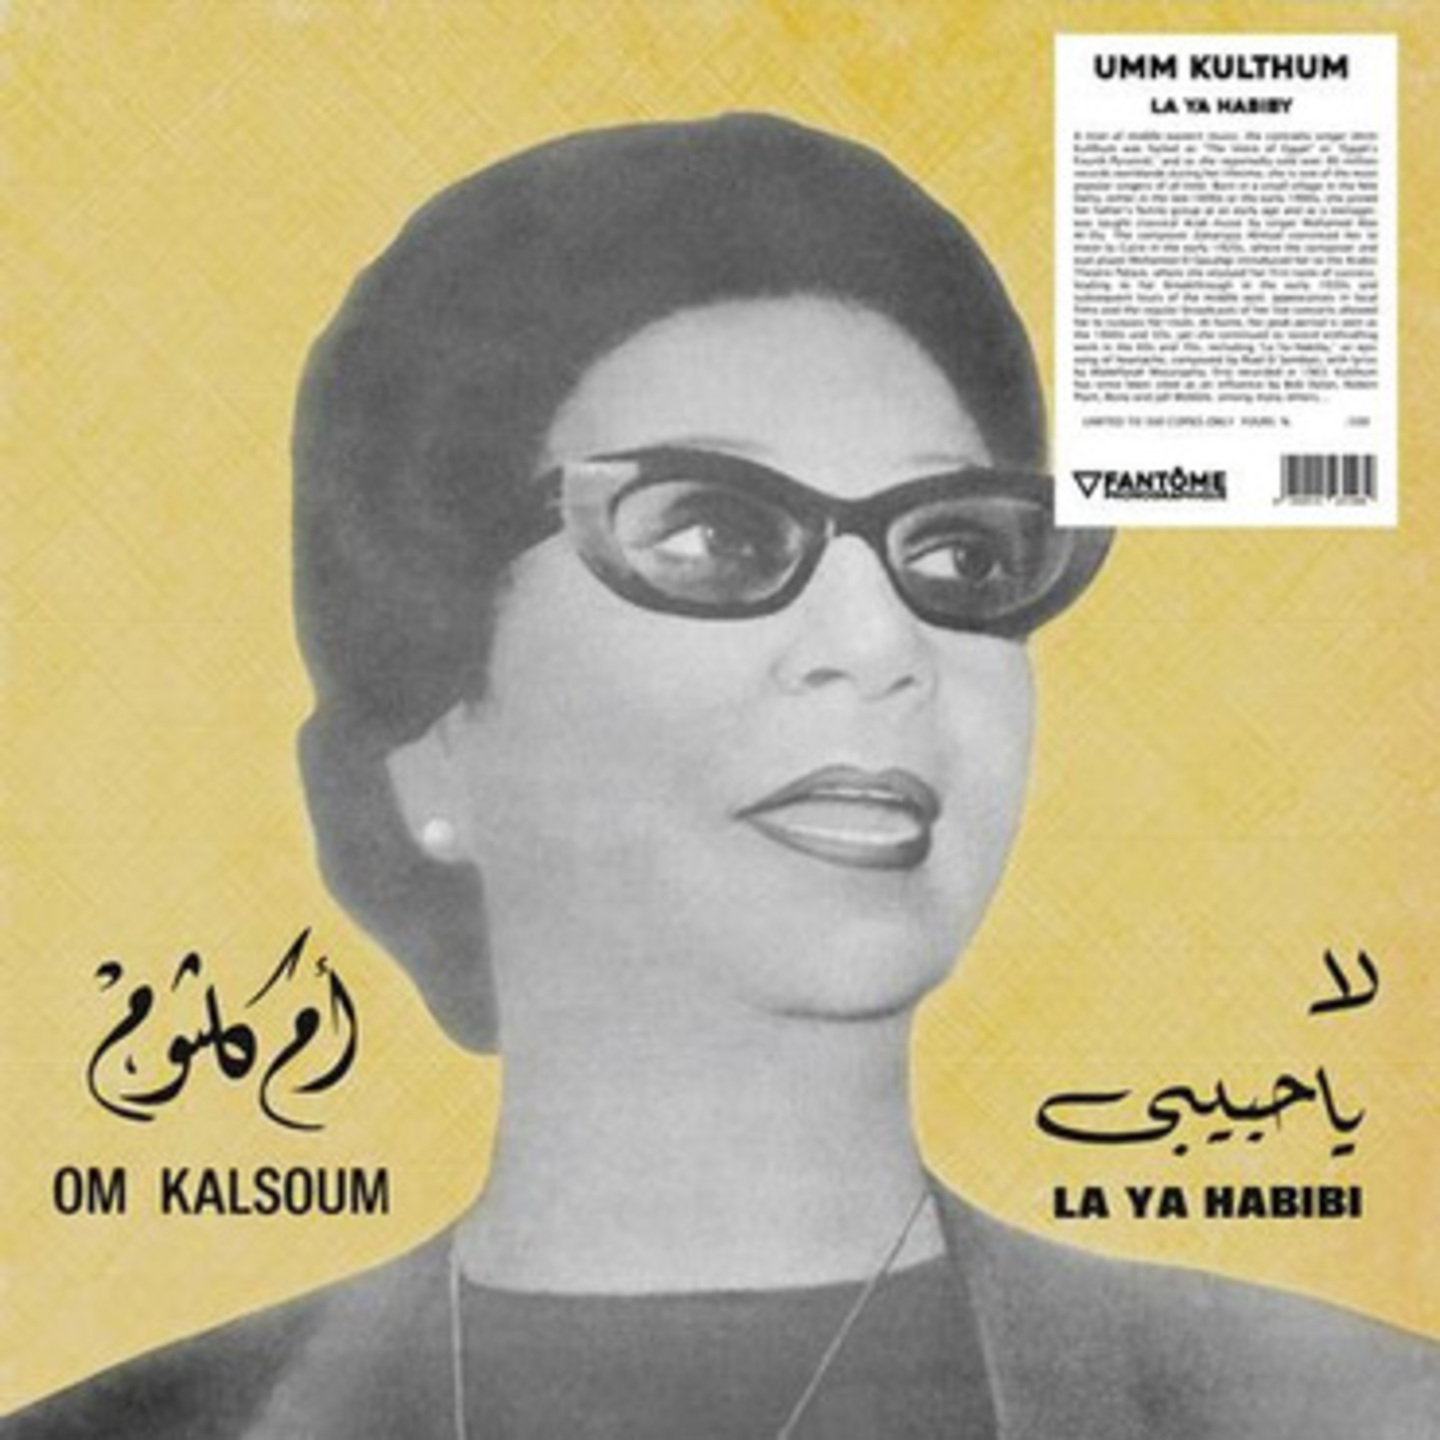 OM KALSOUM - La Ya Habibi LP